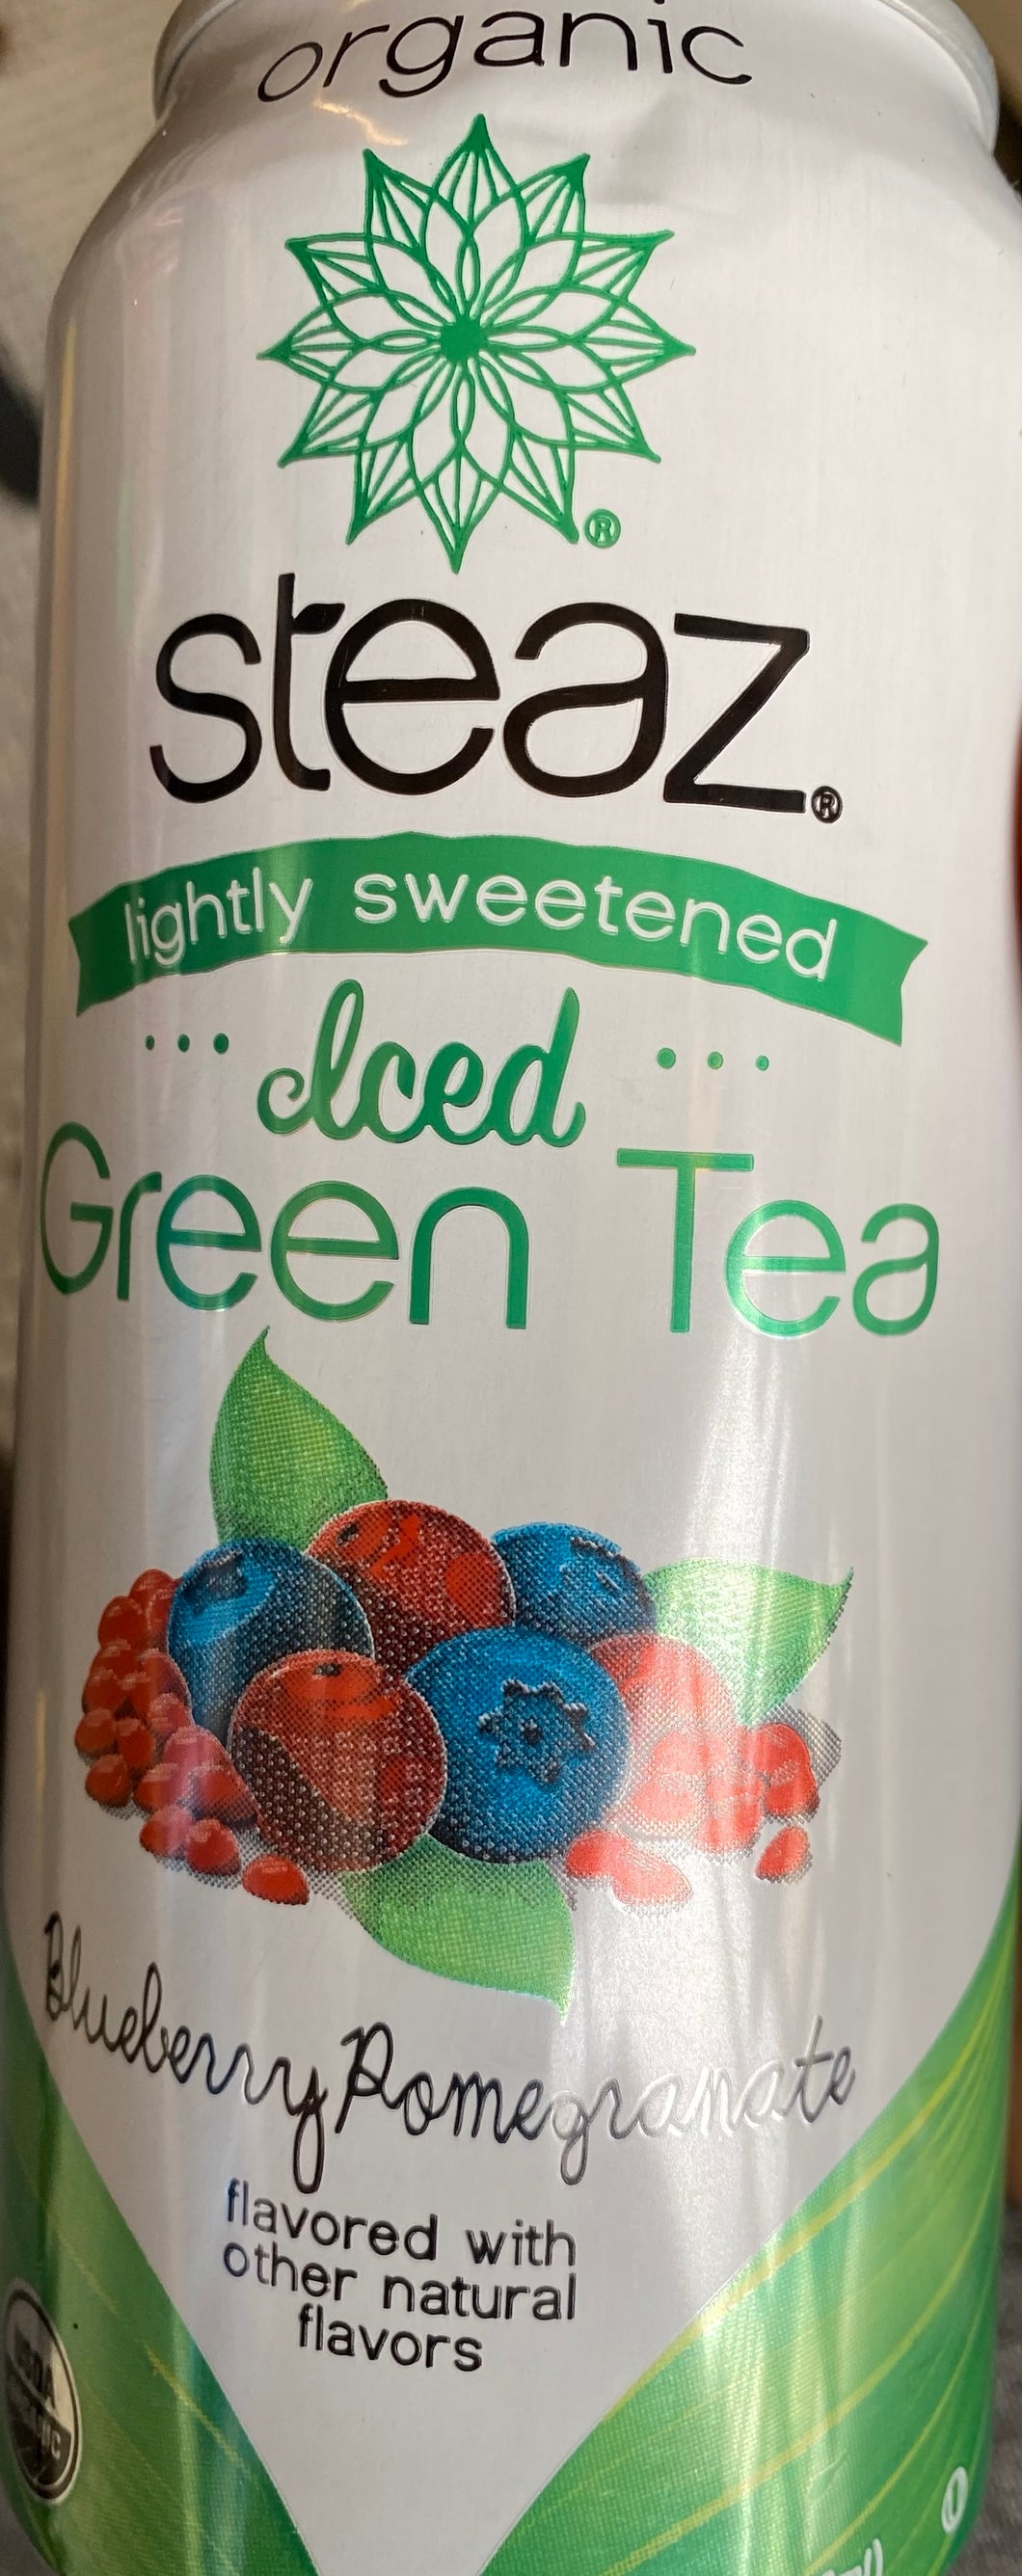 Iced Tea, Organic Blueberry Pomegranate Green, Steaz